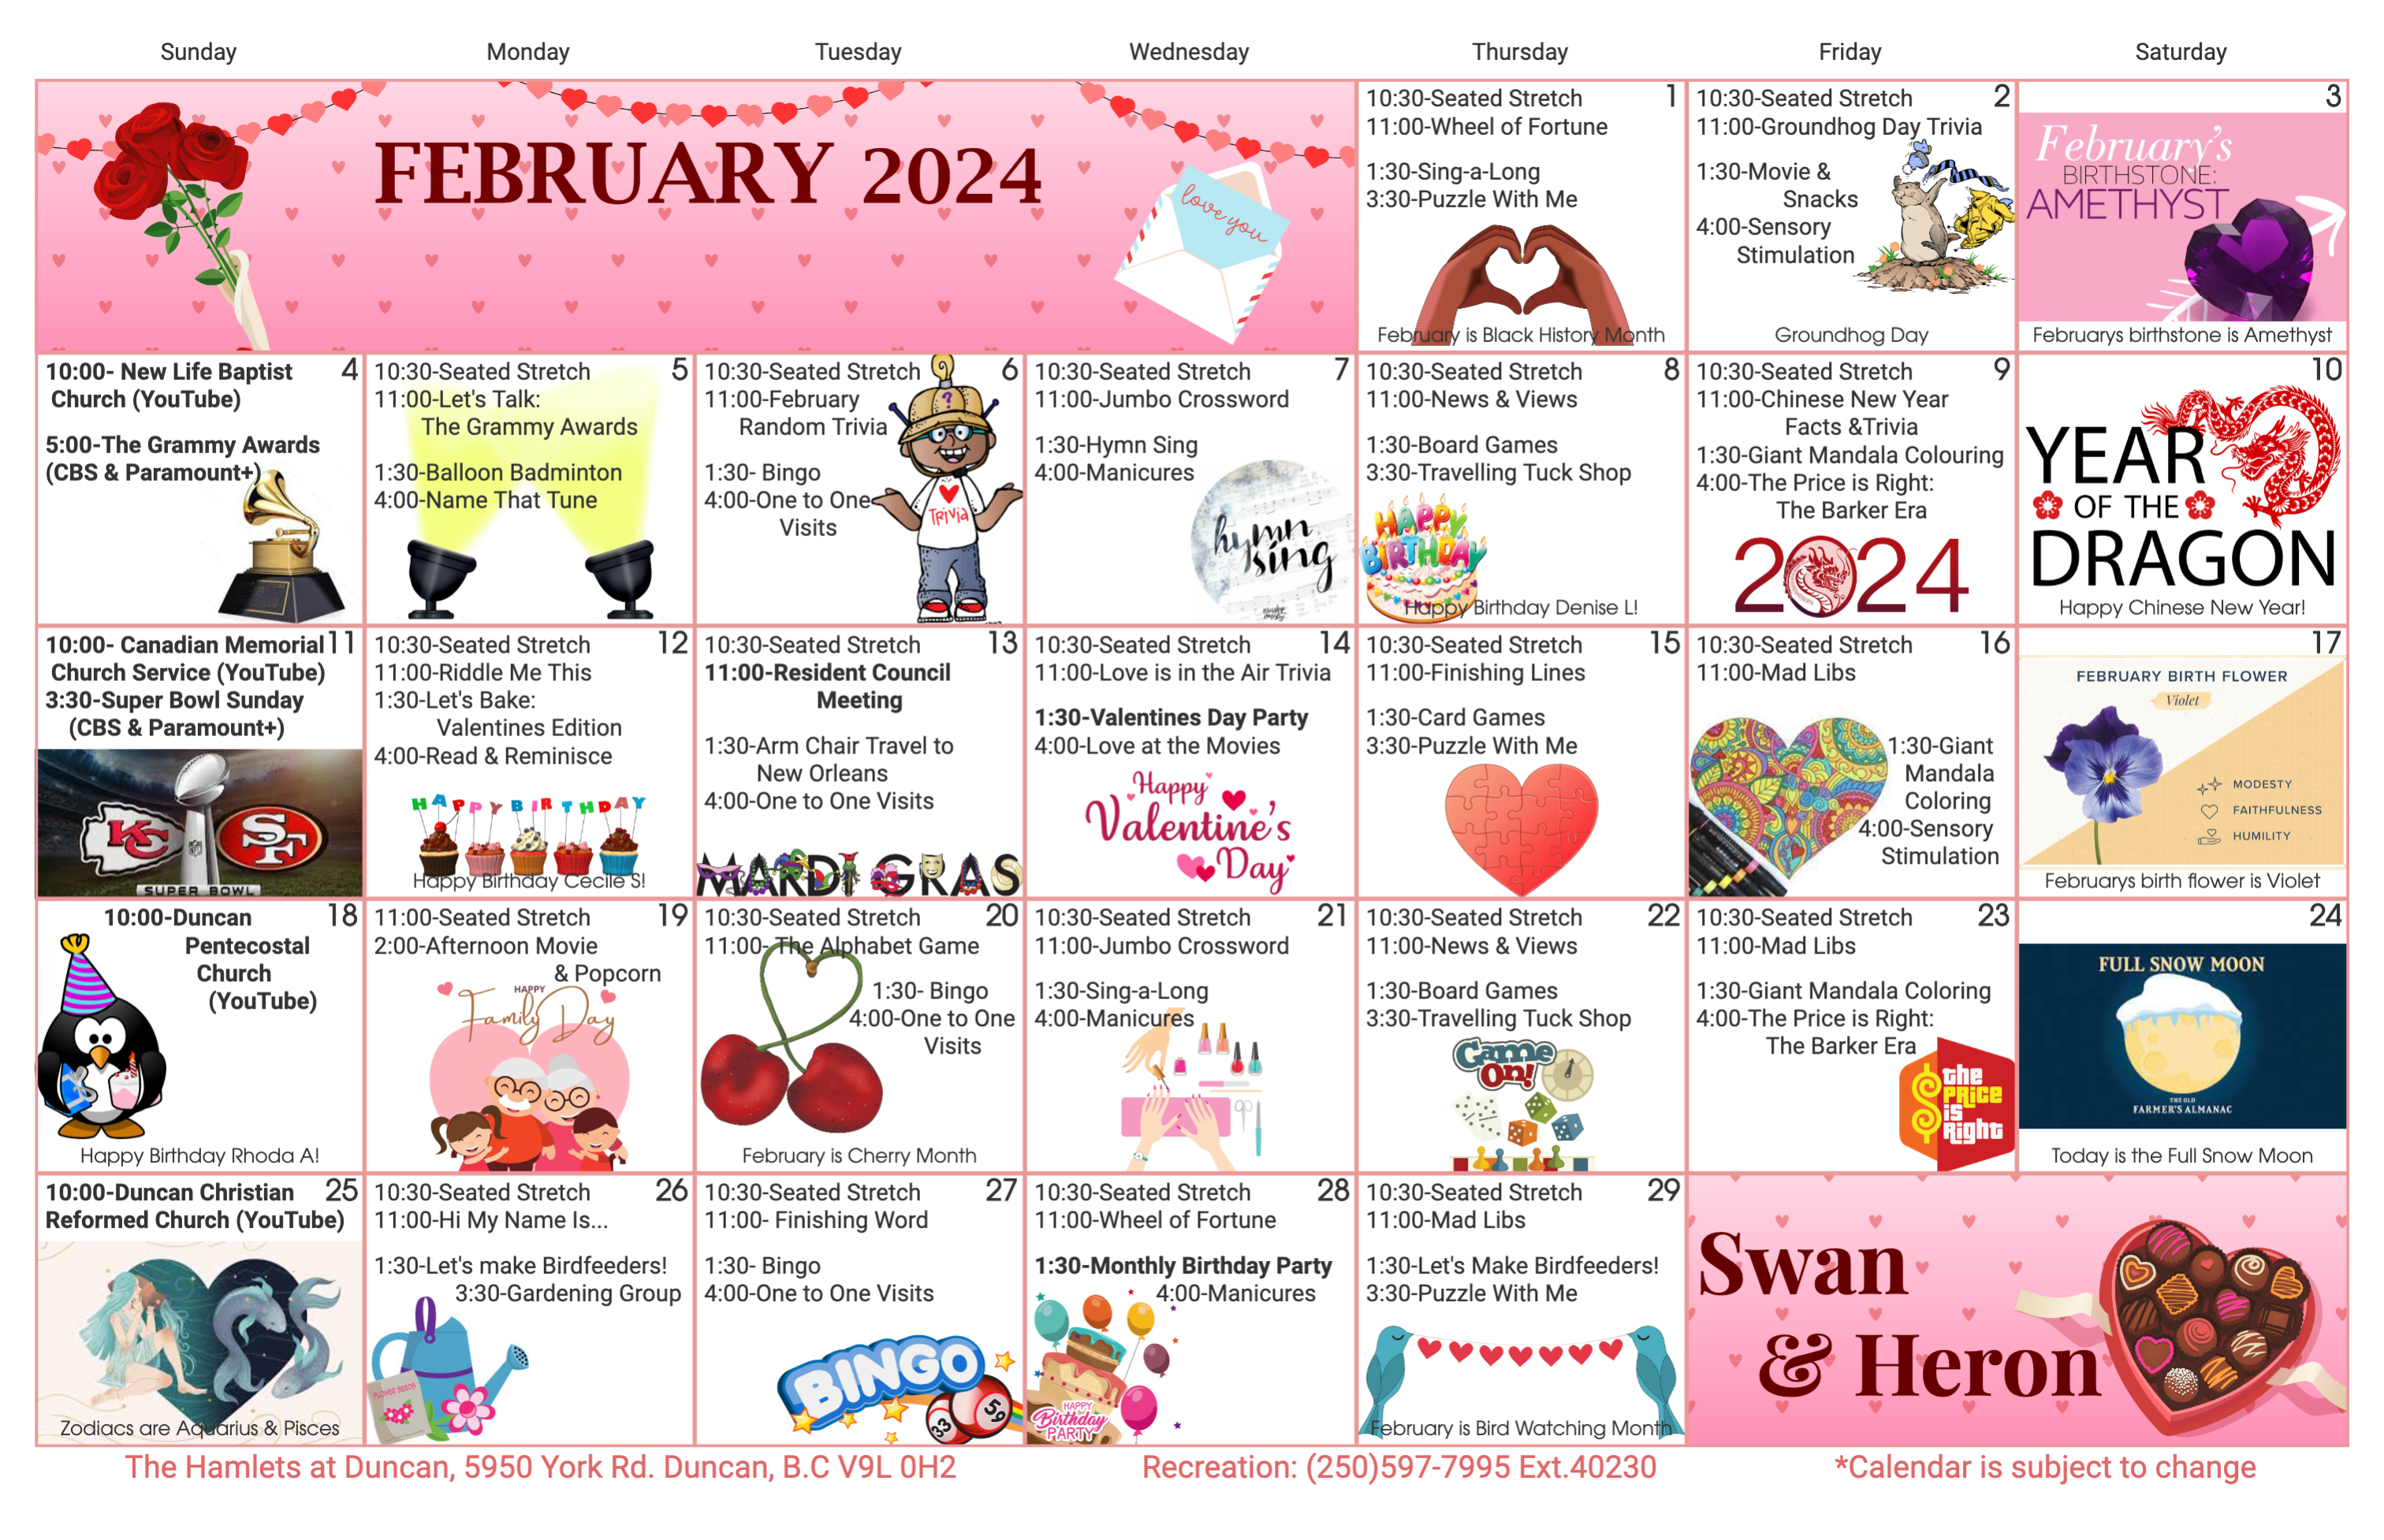 The Hamlets at Duncan February 2024 Swan and Heron event calendar